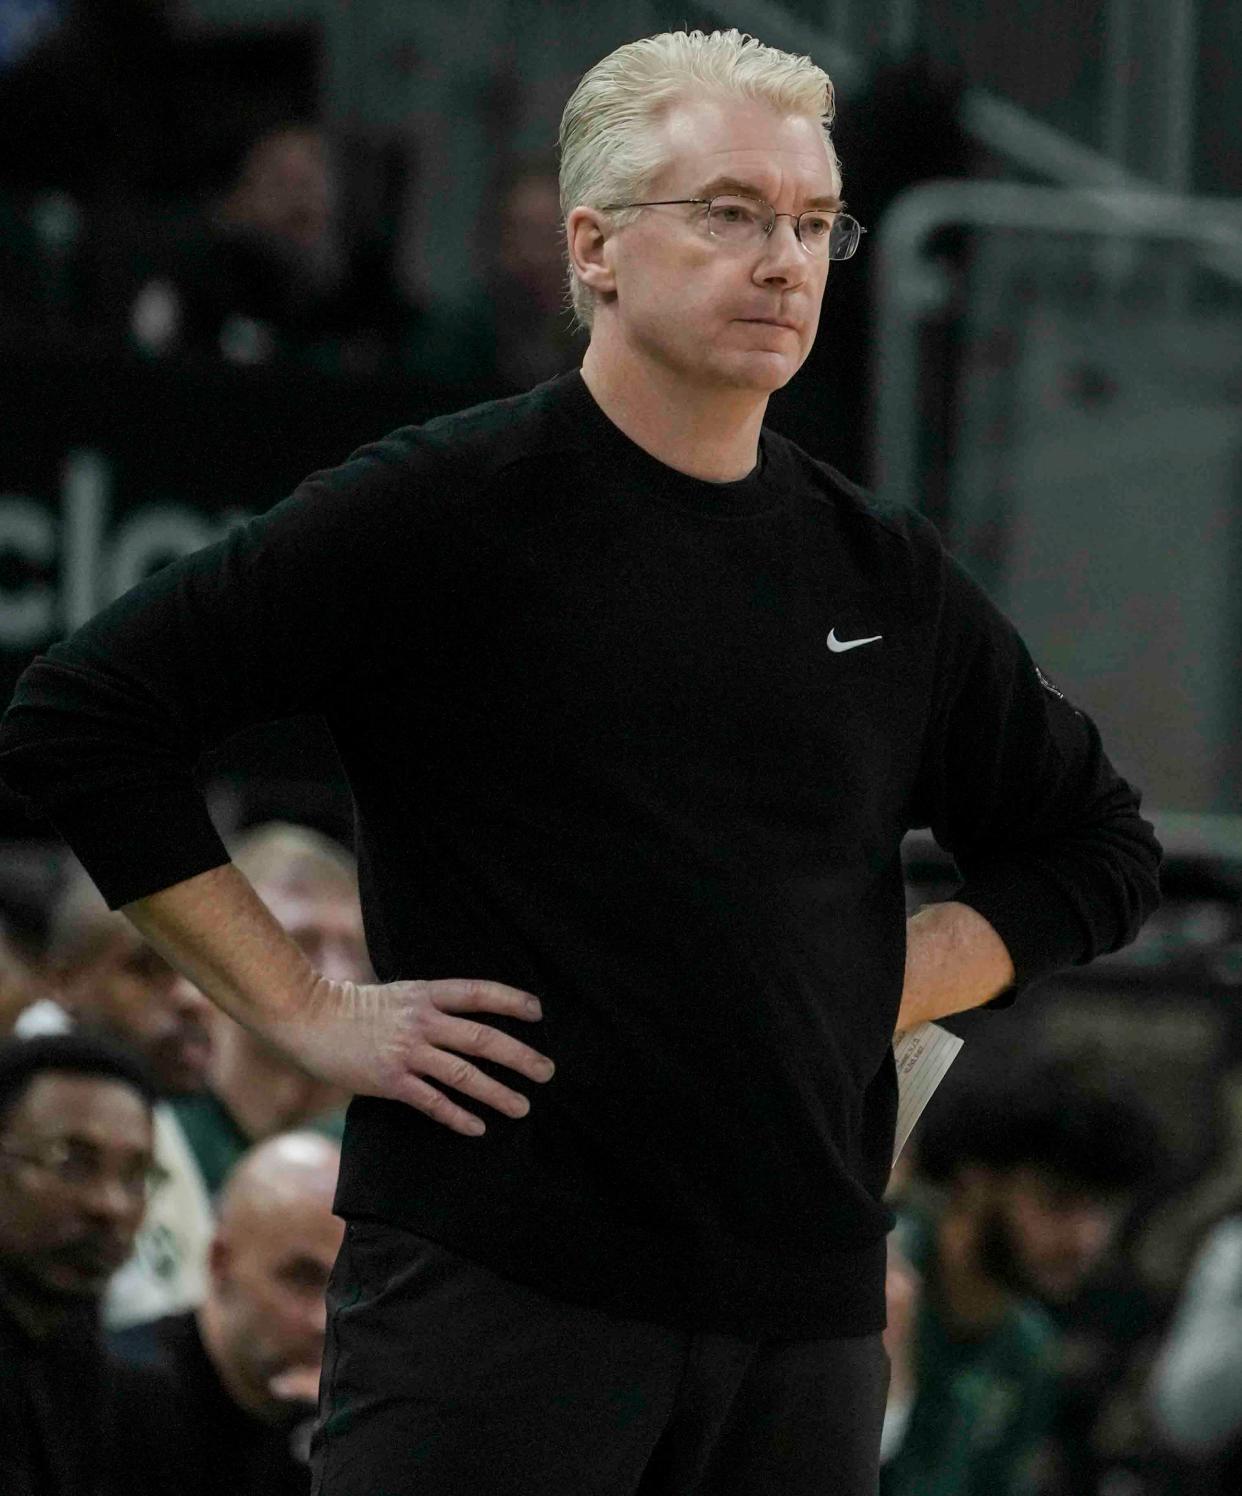 Joe Prunty is the Milwaukee Bucks' interim head coach following the firing of Adrian Griffin.